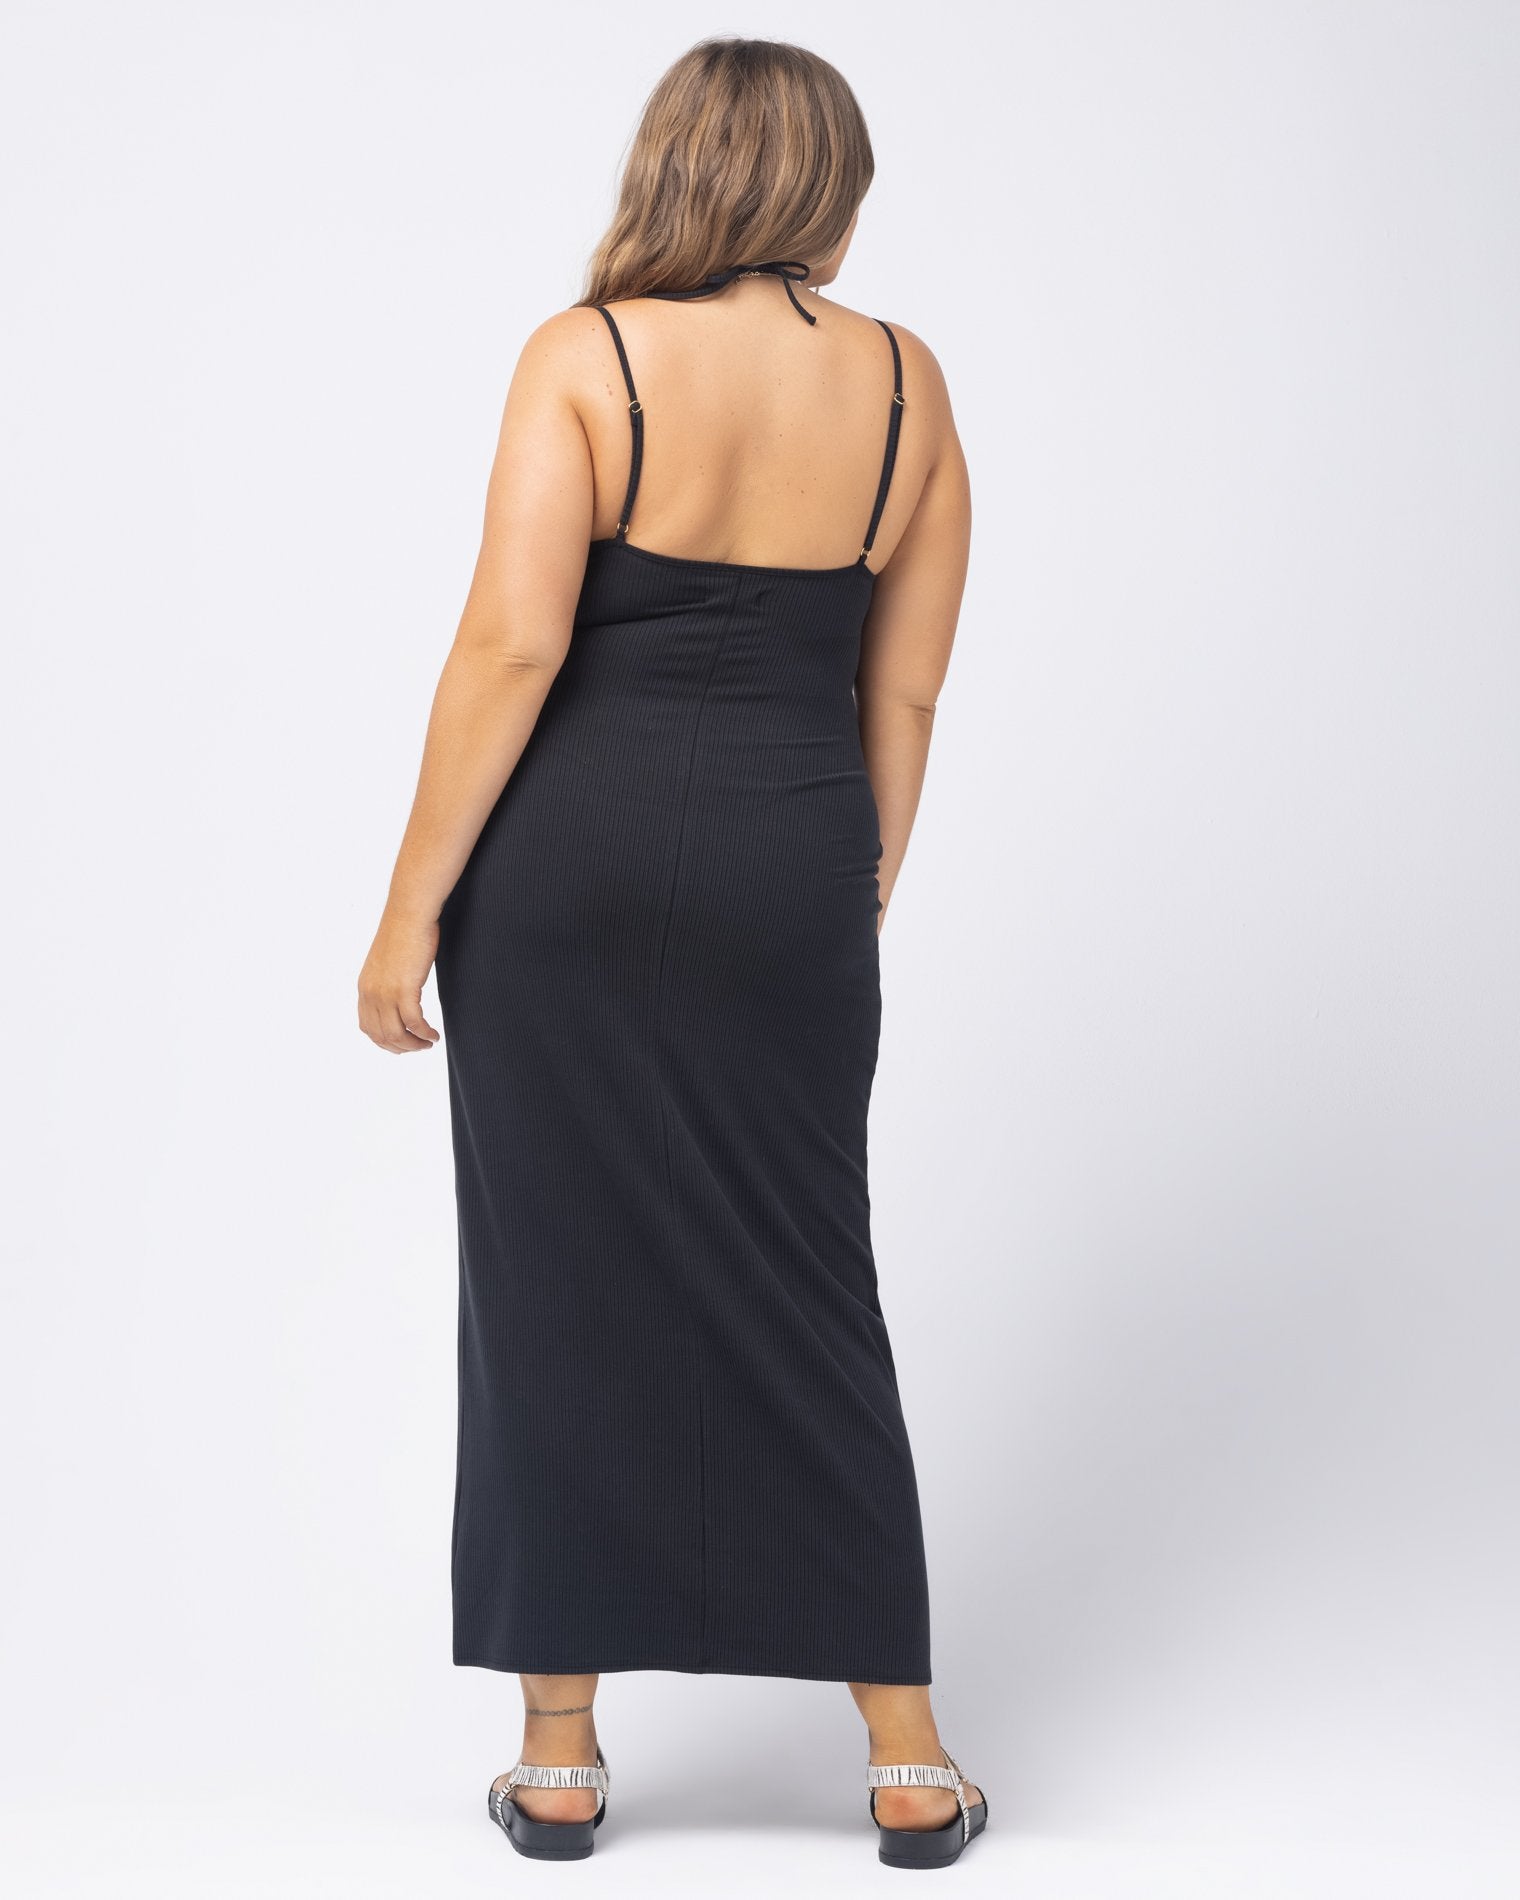 Naomi Dress - Black Black | Model: Ali (size: XL)